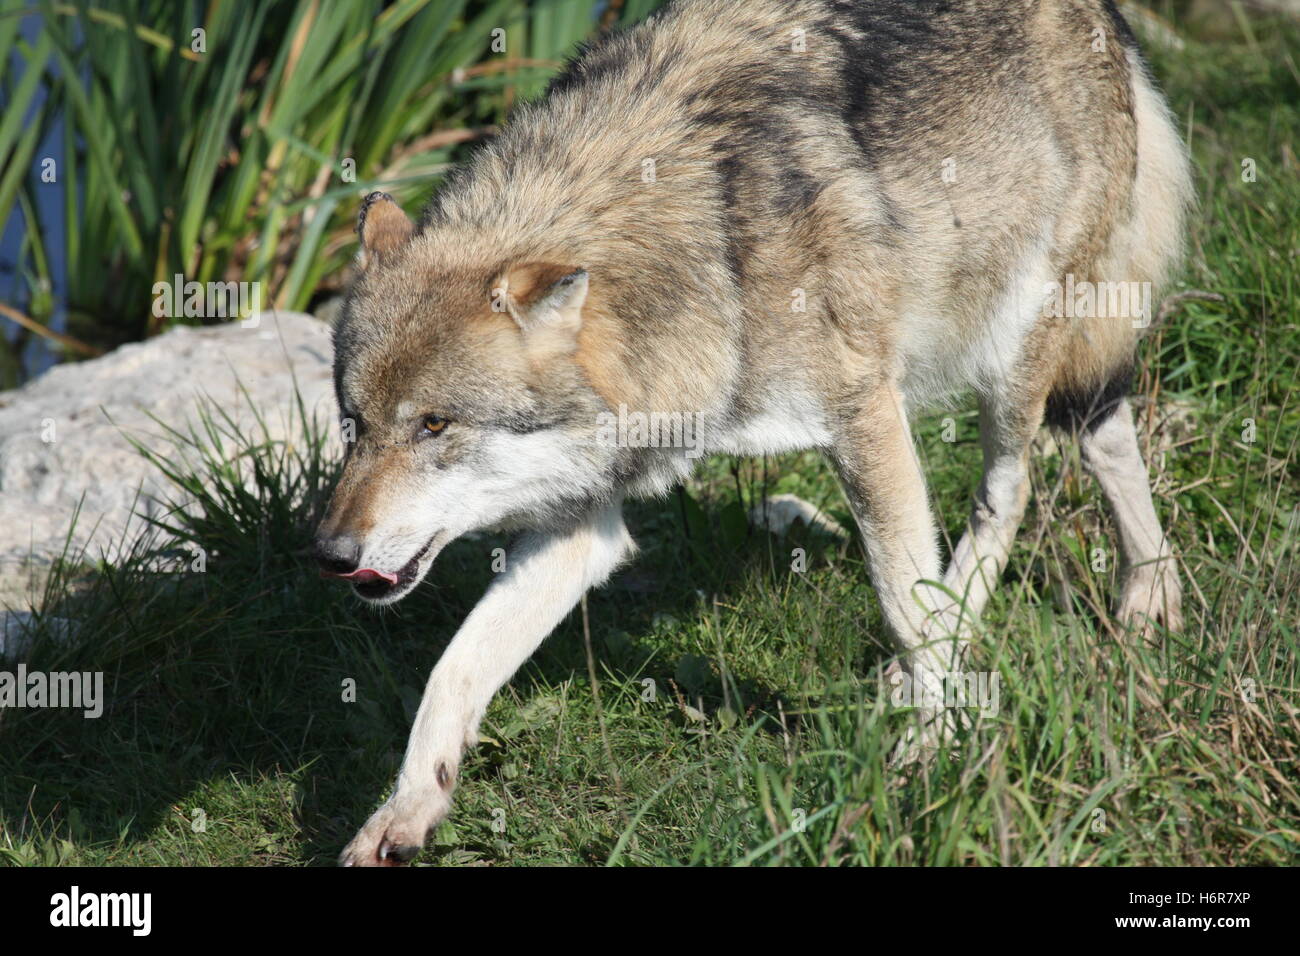 wolf dog predator hoot hooting howling howl wolf lupus canis lupus lupo wildhund lupus canis lupus Stock Photo